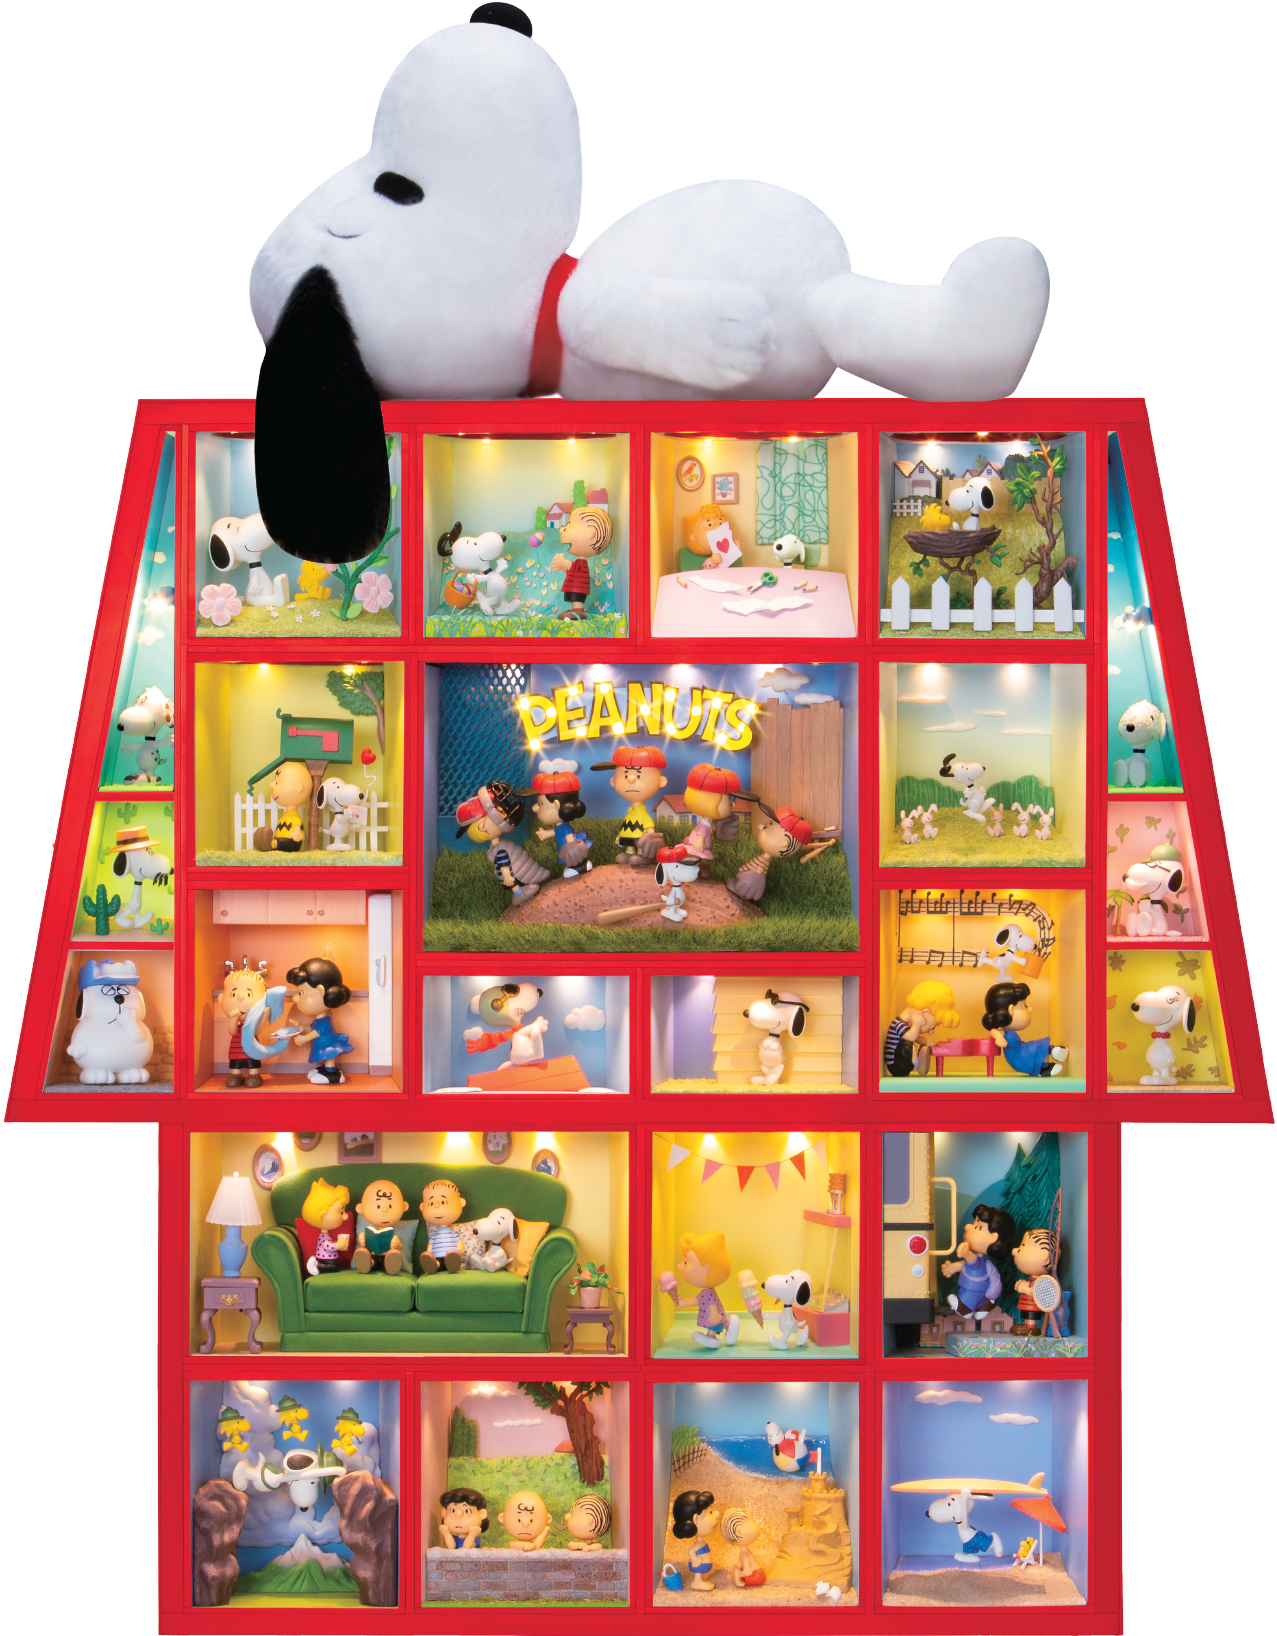 Snoopy House